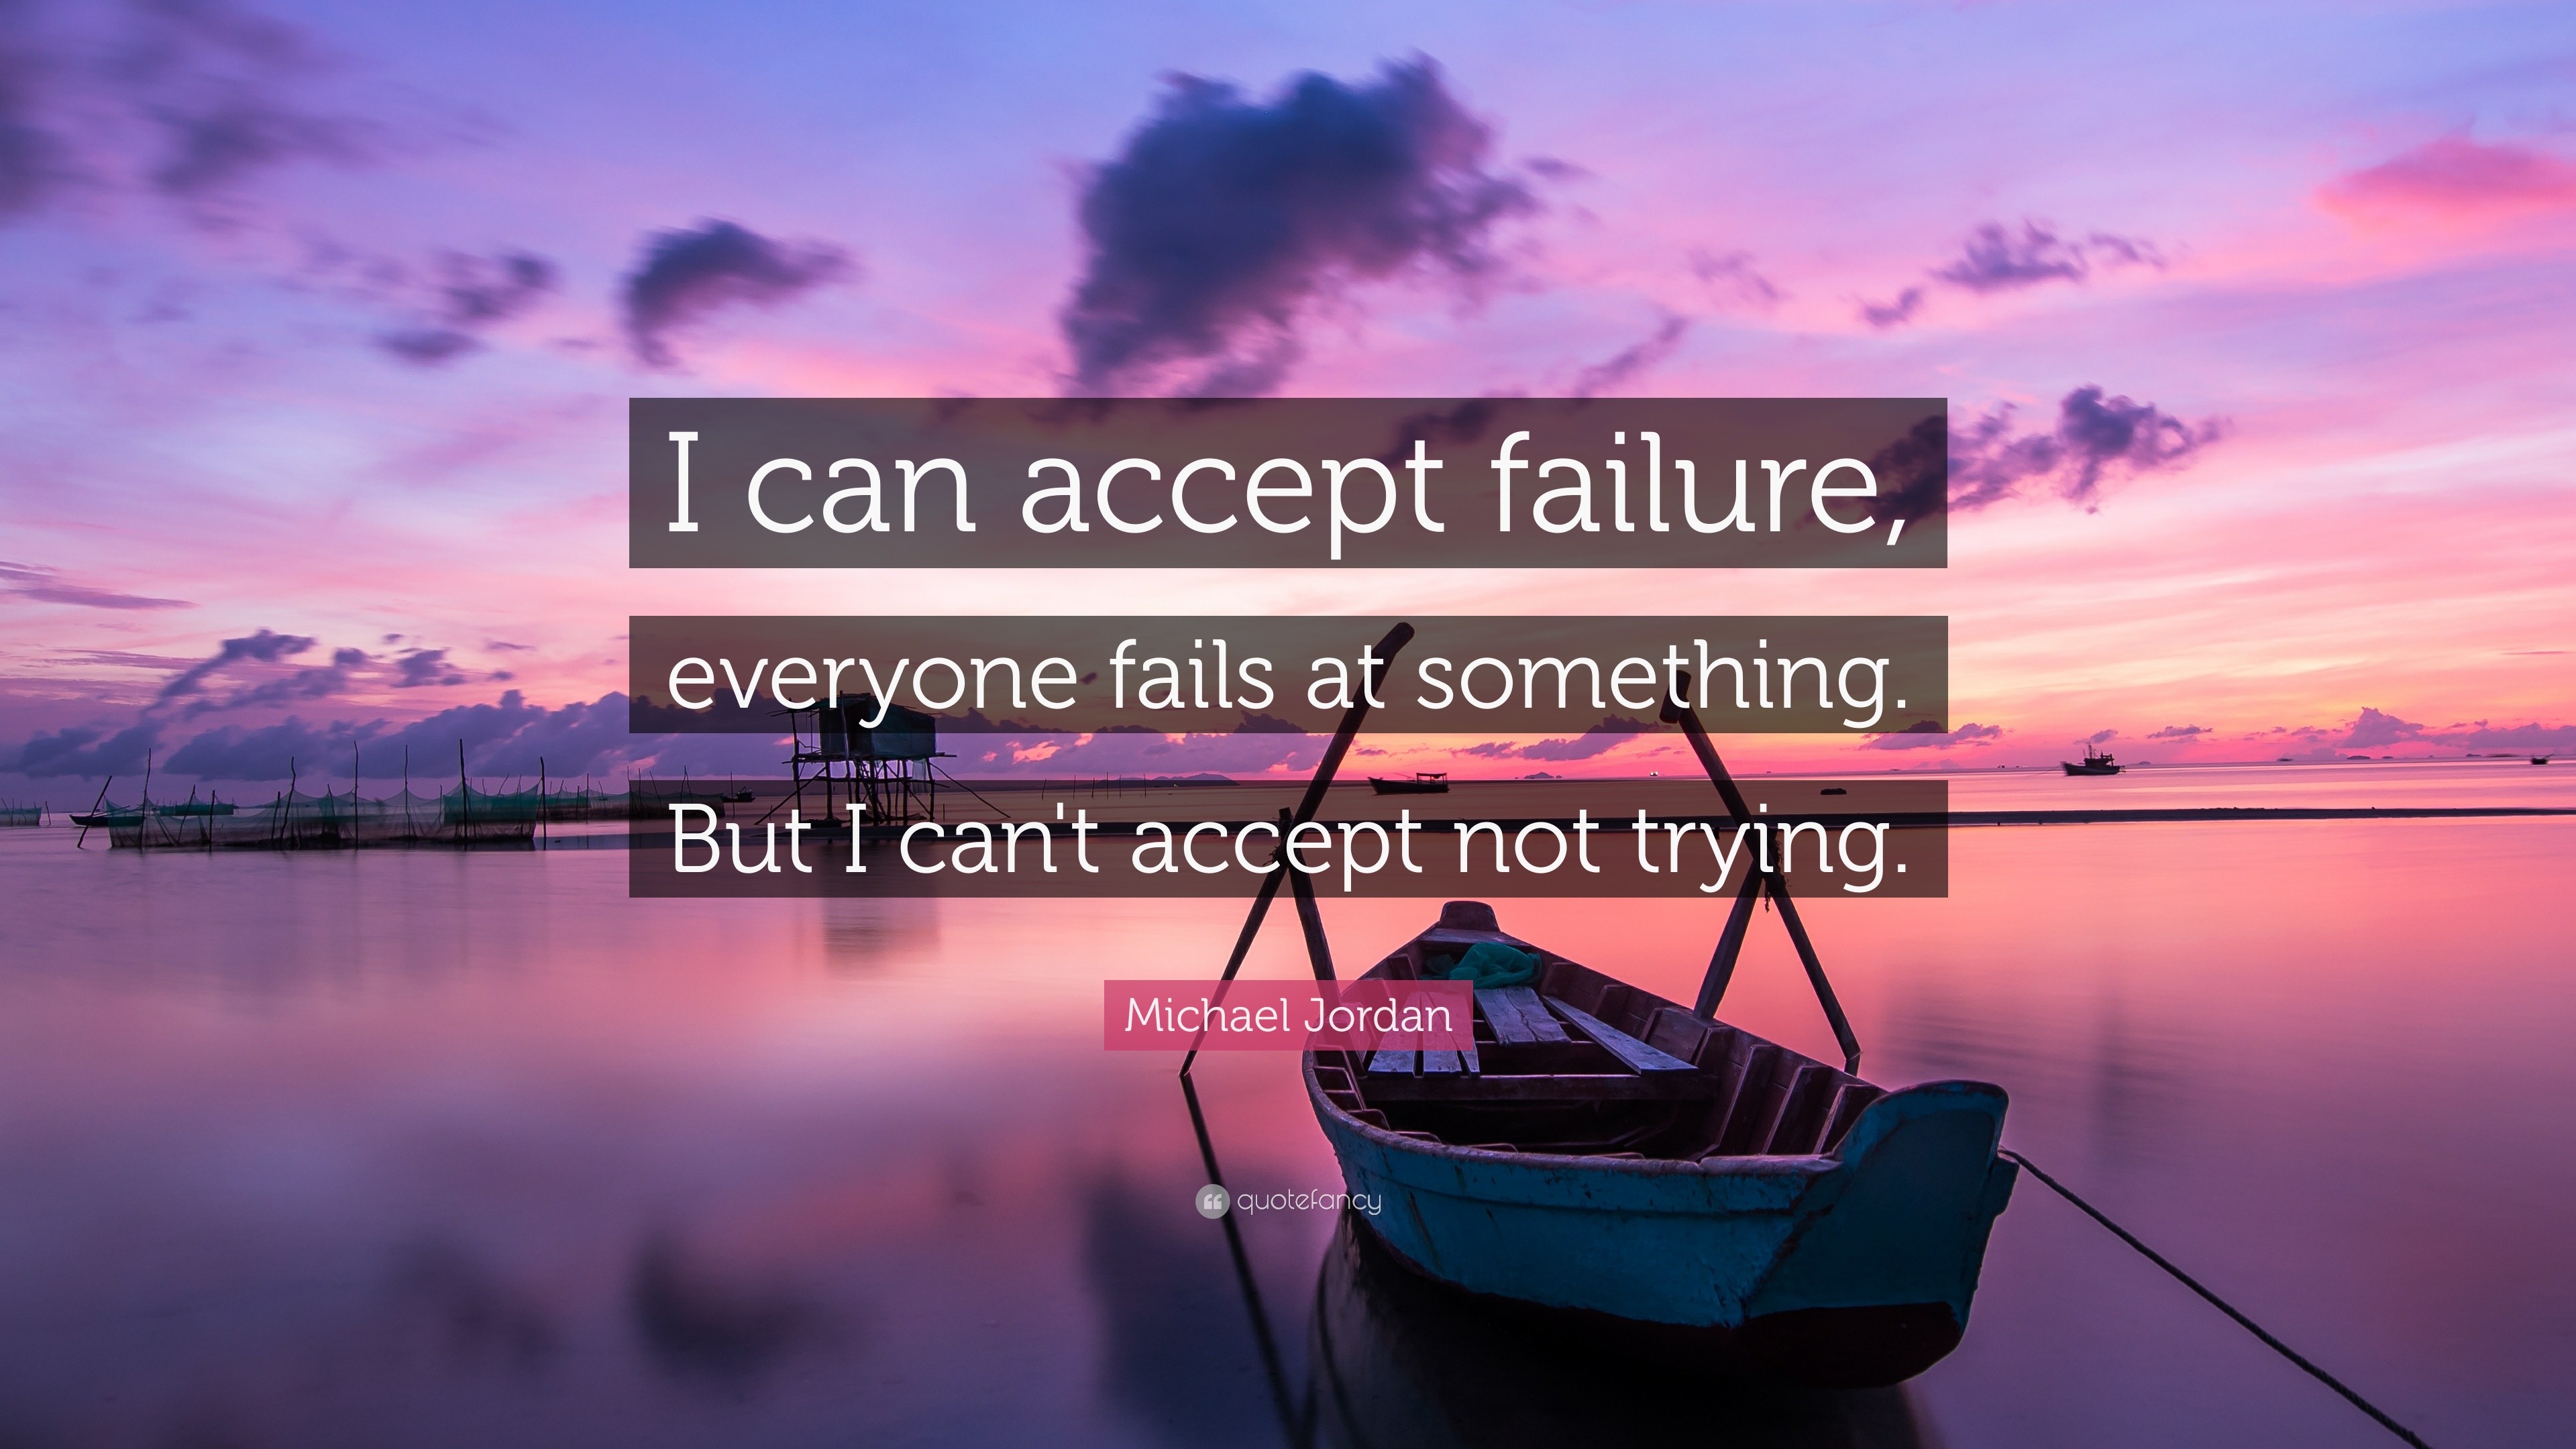 Michael Jordan Quote: “I can accept failure, everyone fails at